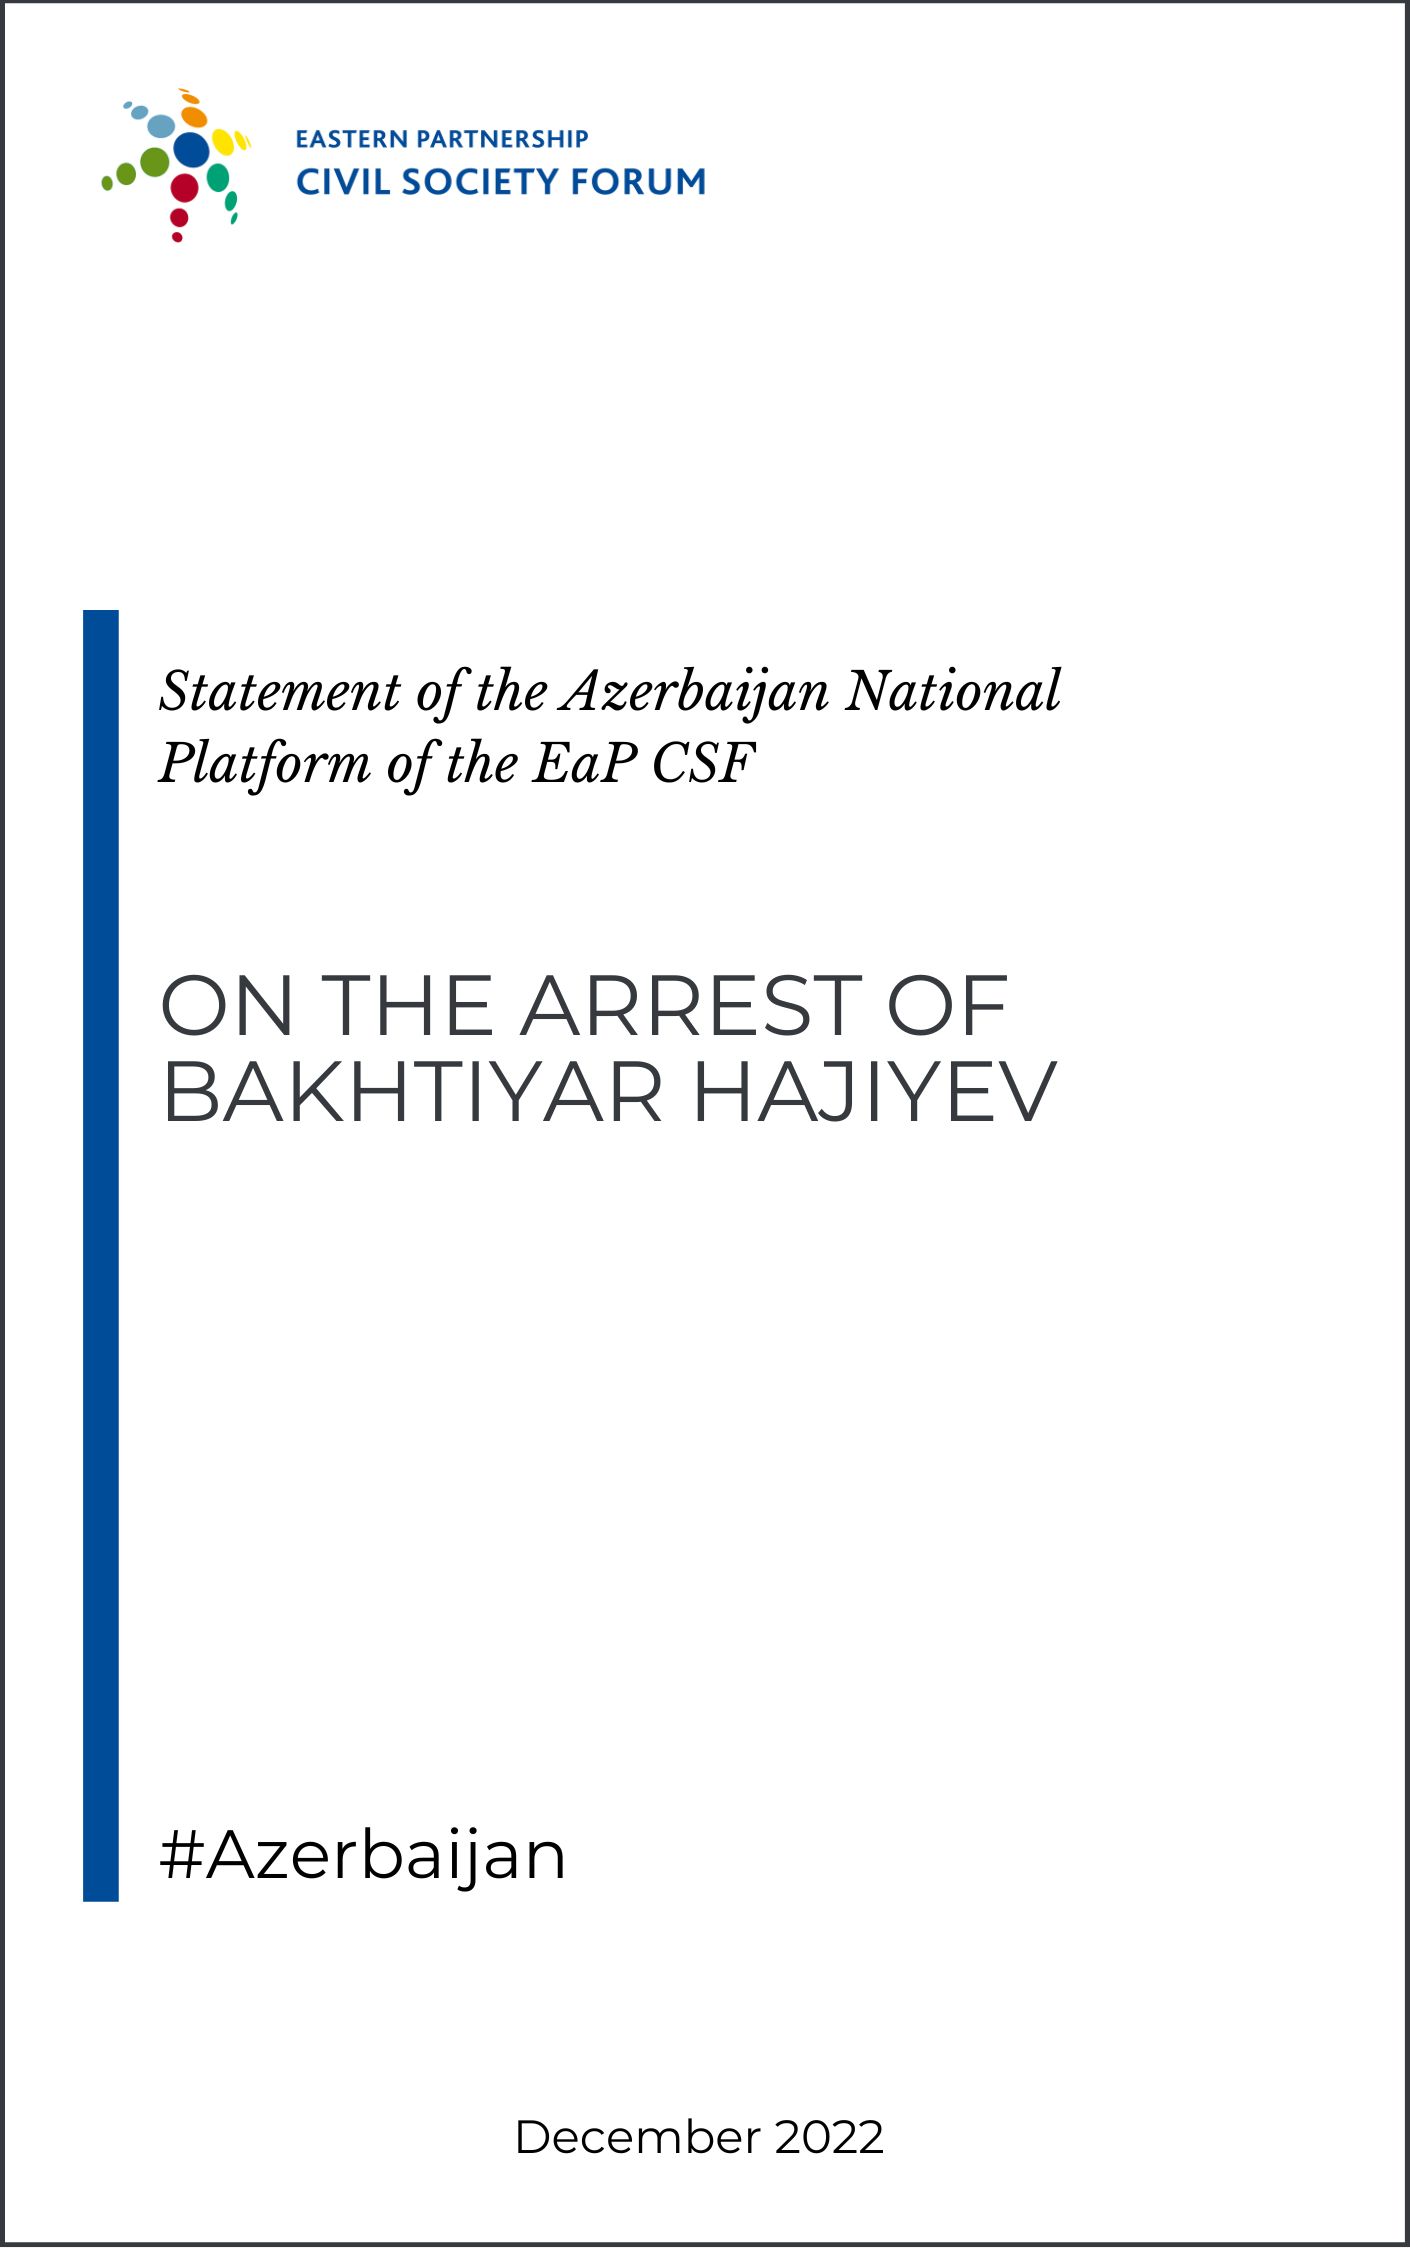 Statement of the Azerbaijan National Platform  of the Eastern Partnership Civil Society Forum on the arrest of Bakhtiyar Hajiyev